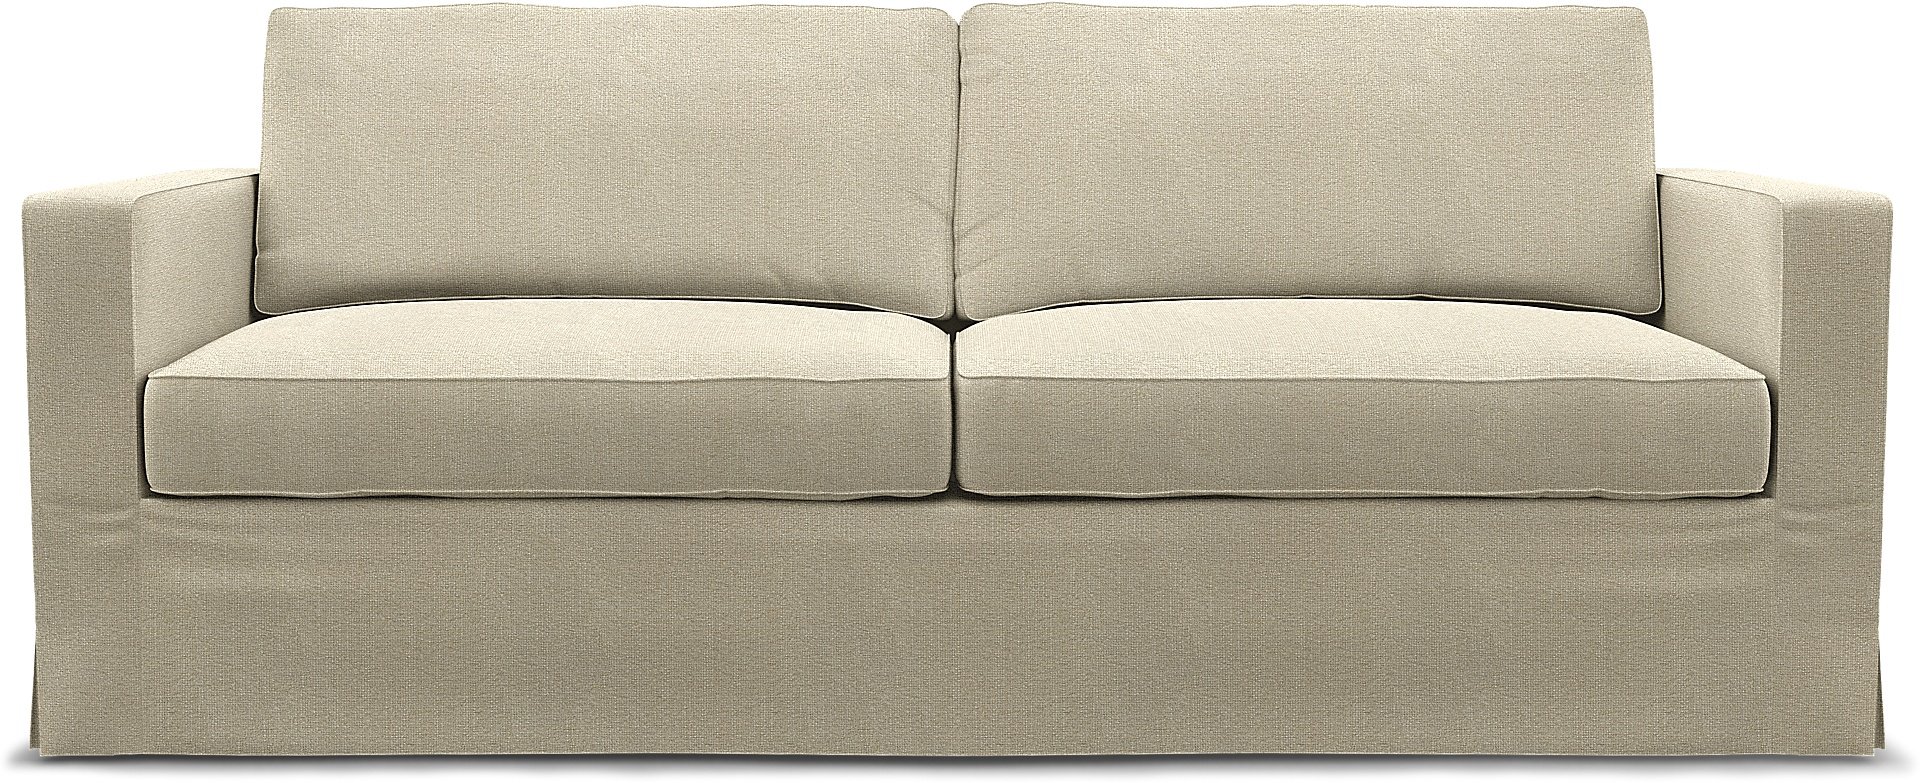 IKEA - Karlstad 3 Seater Sofa Cover, Cream, Boucle & Texture - Bemz